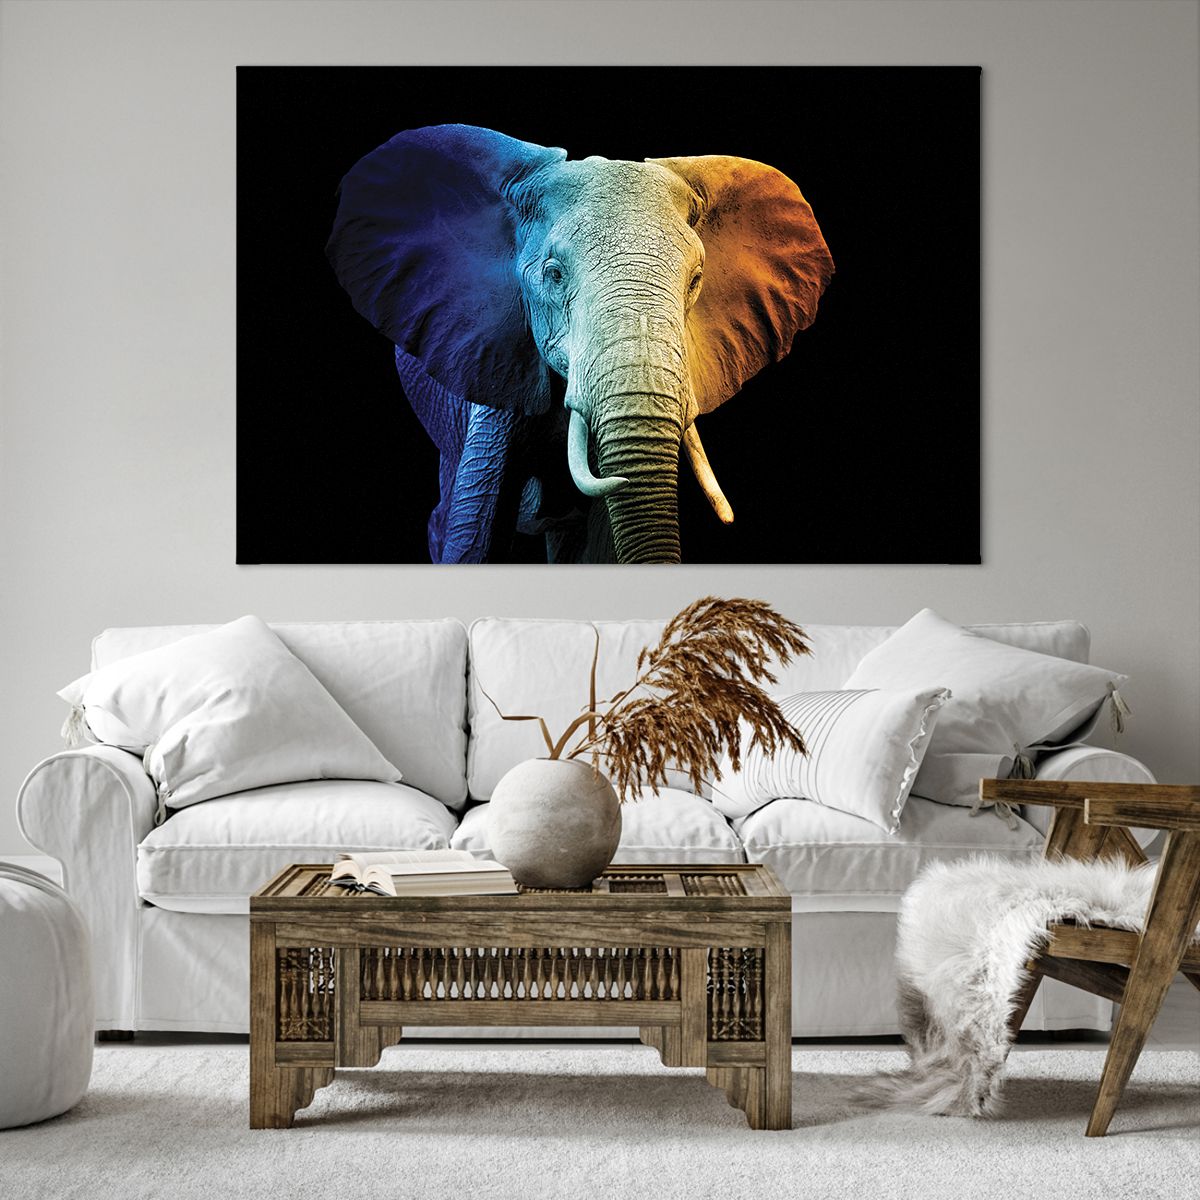 Bild auf Leinwand Abstraktion, Bild auf Leinwand Elefant, Bild auf Leinwand Tiere, Bild auf Leinwand Afrika, Bild auf Leinwand Safari